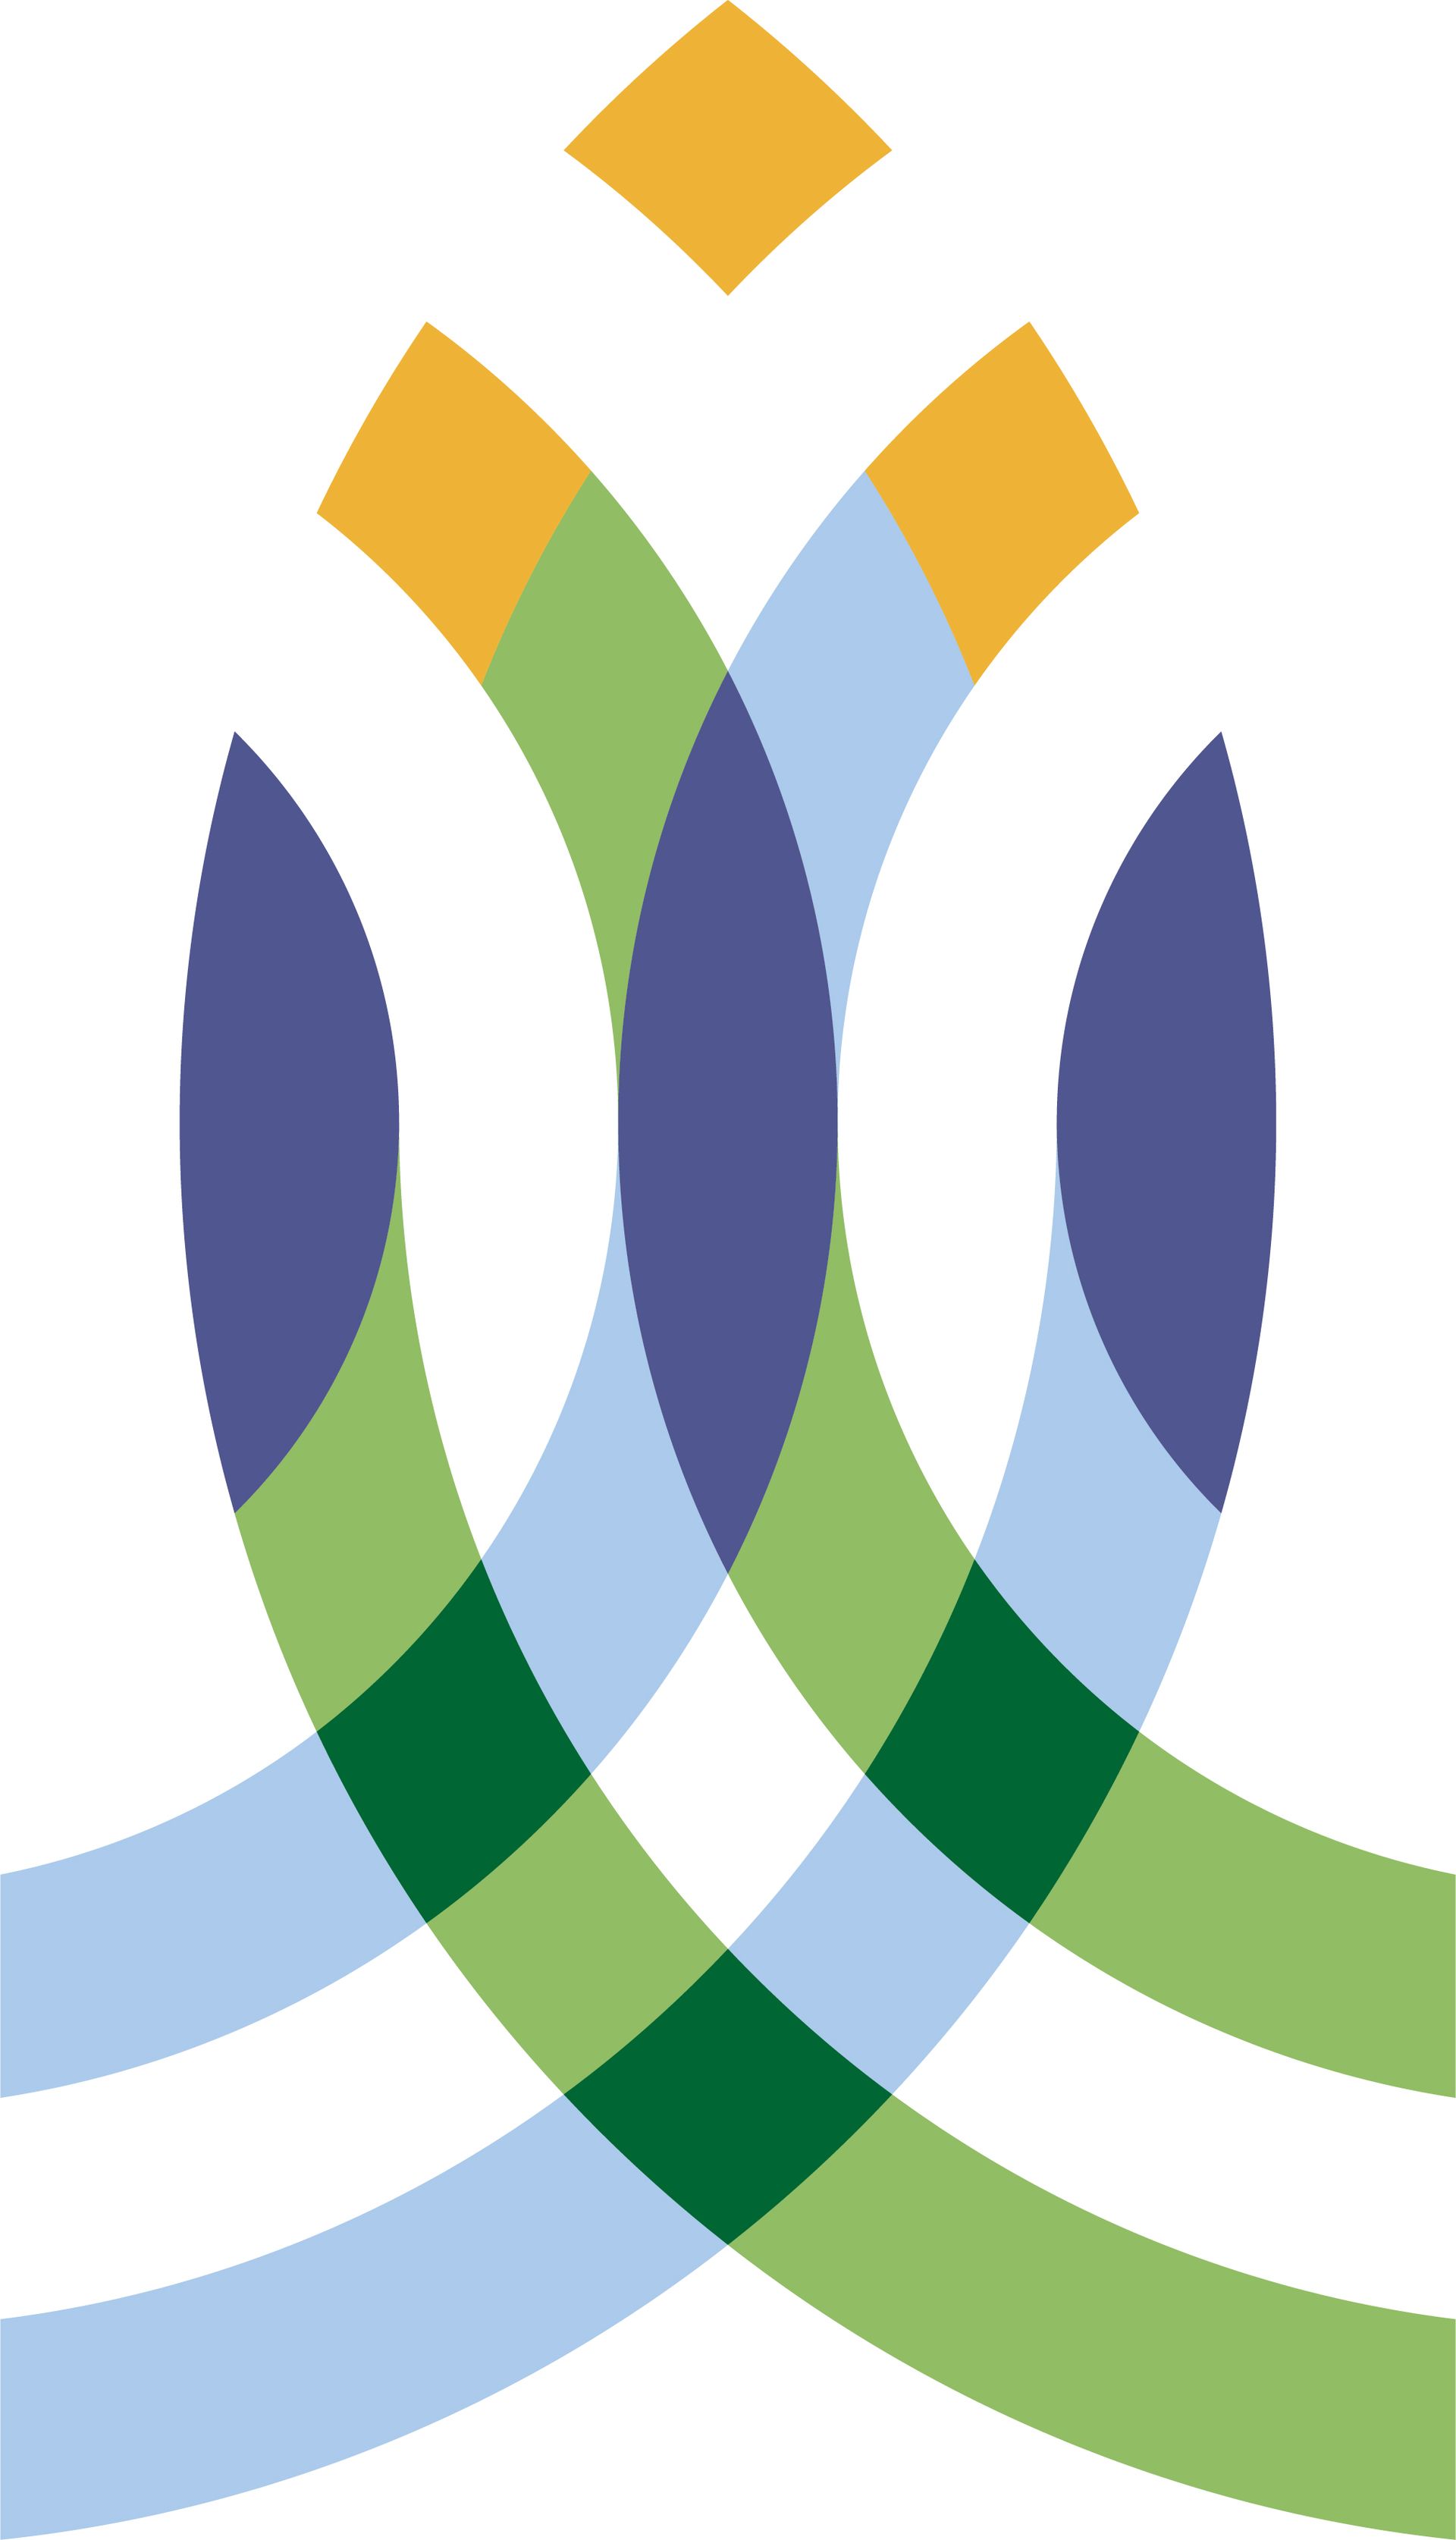 NGK logo kerk app 